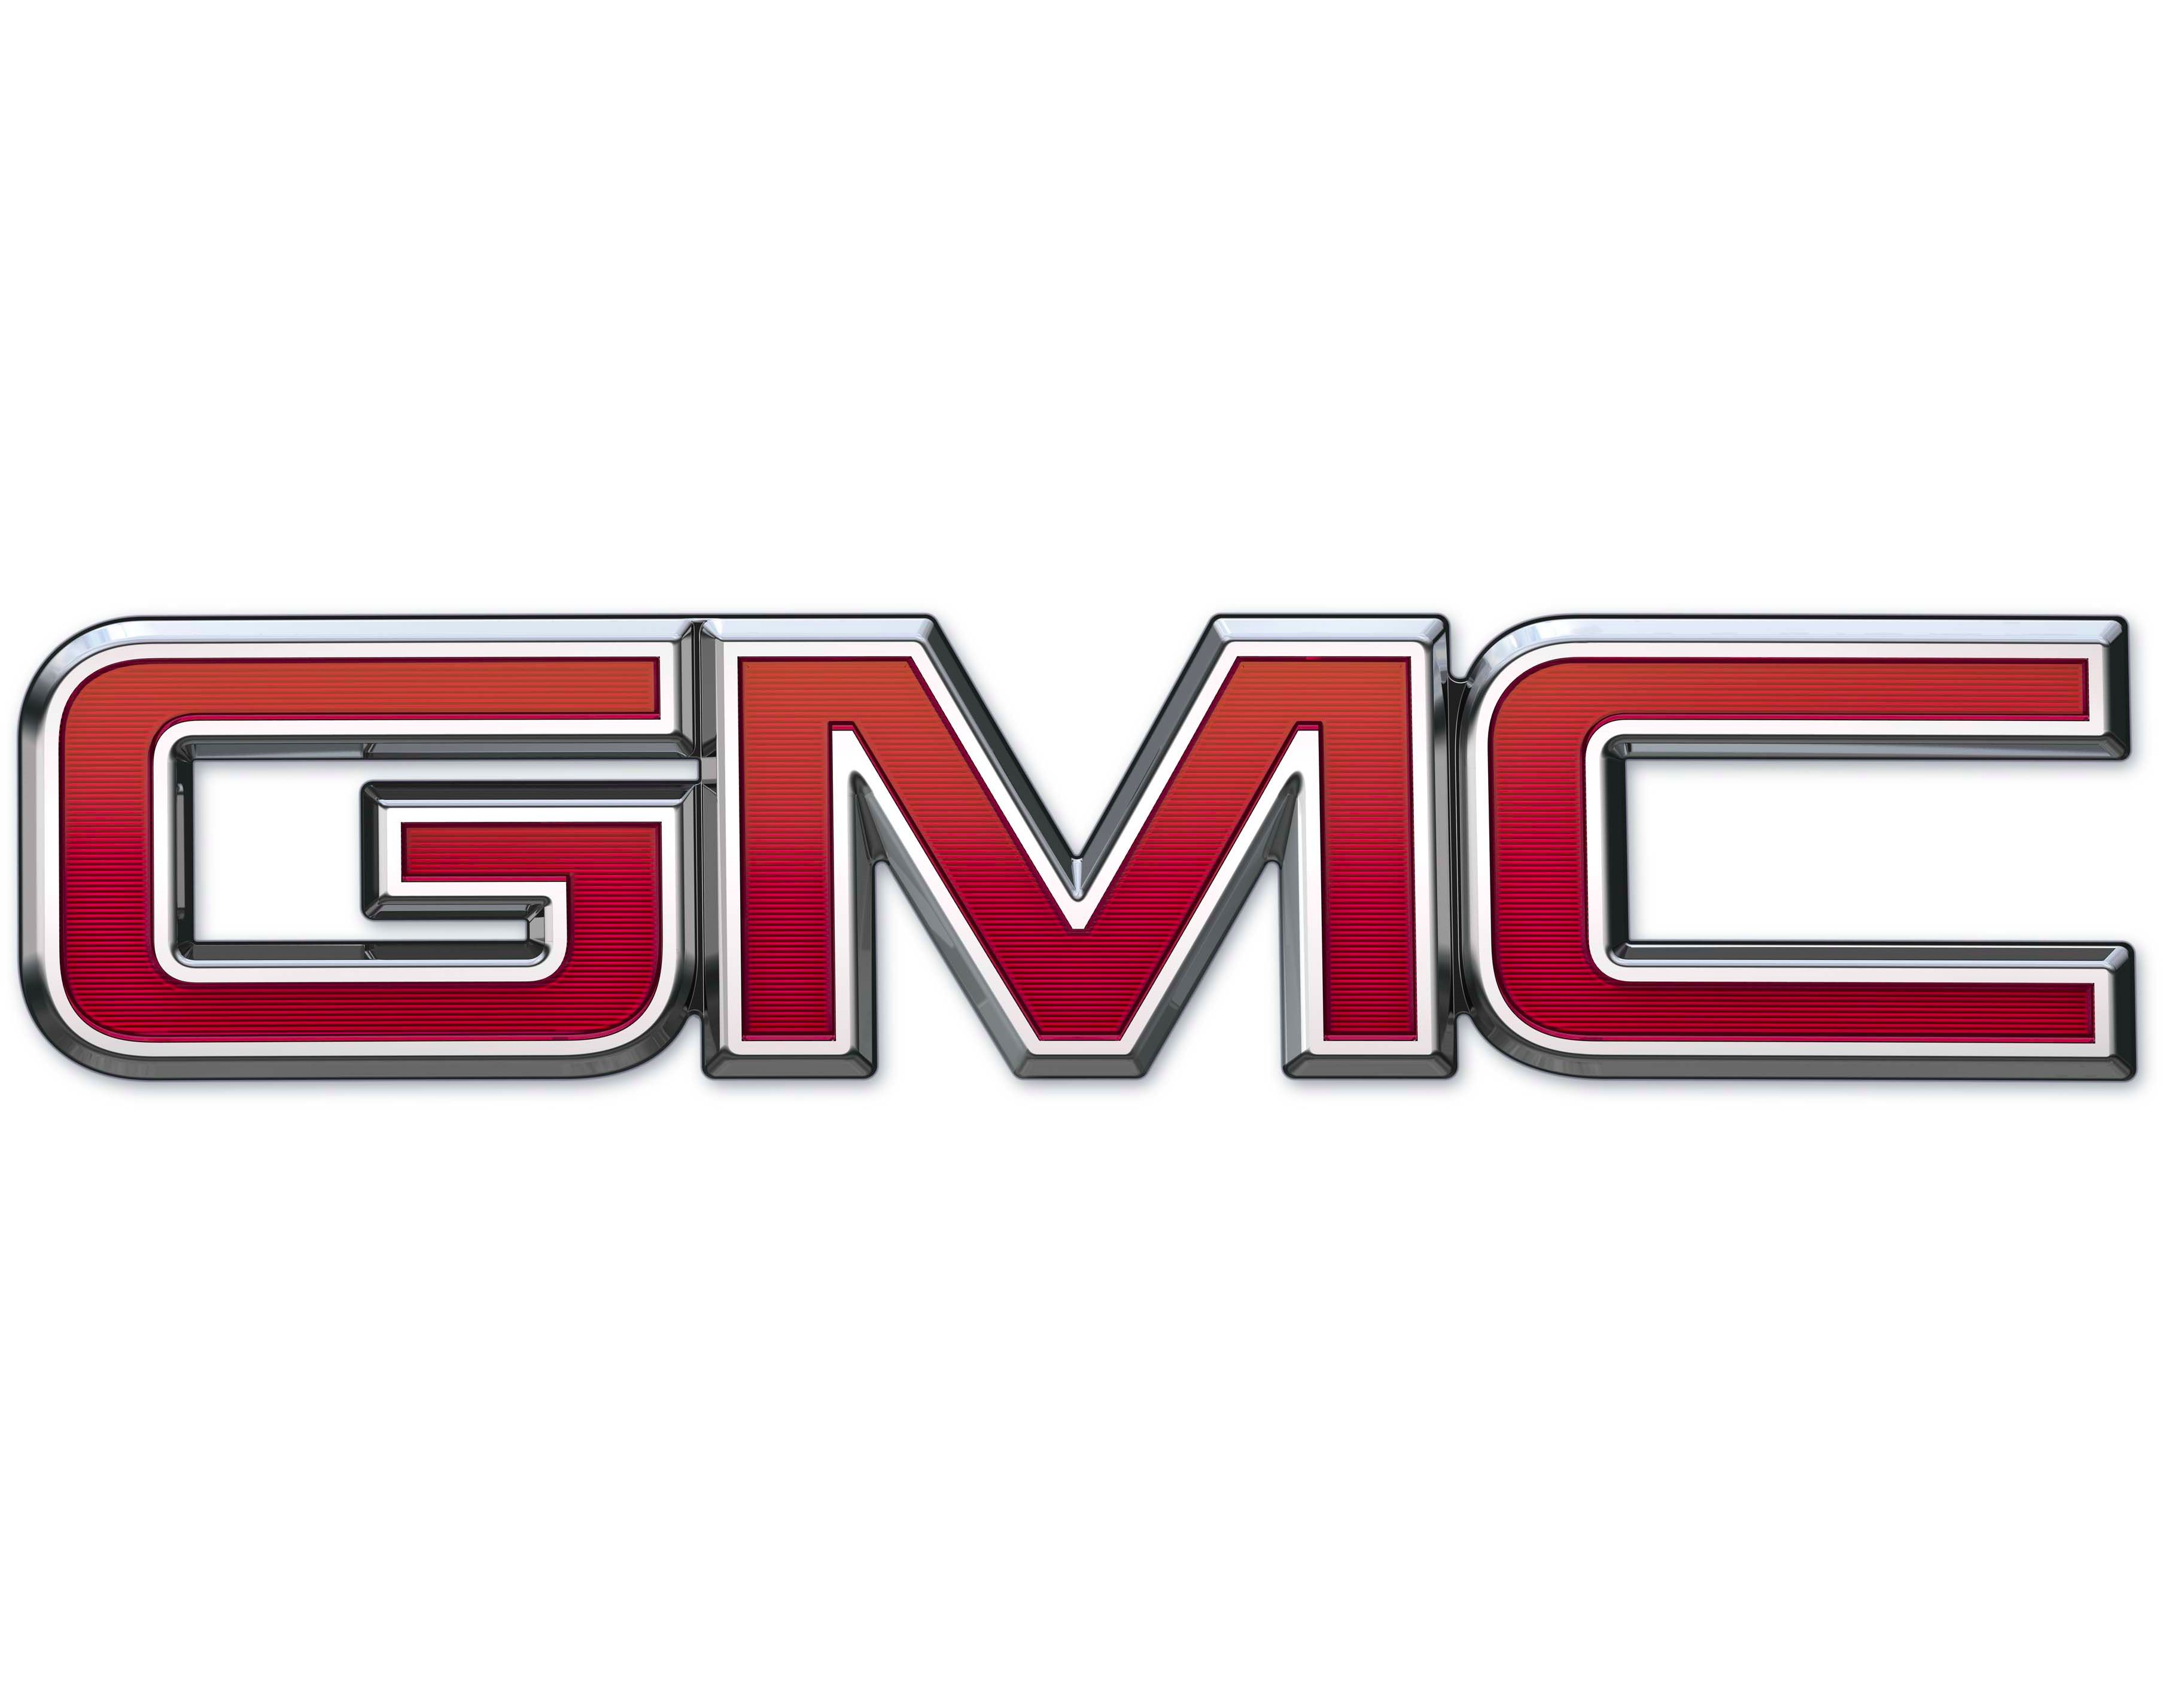 Вентилятор для GMC: купить по лучшим ценам